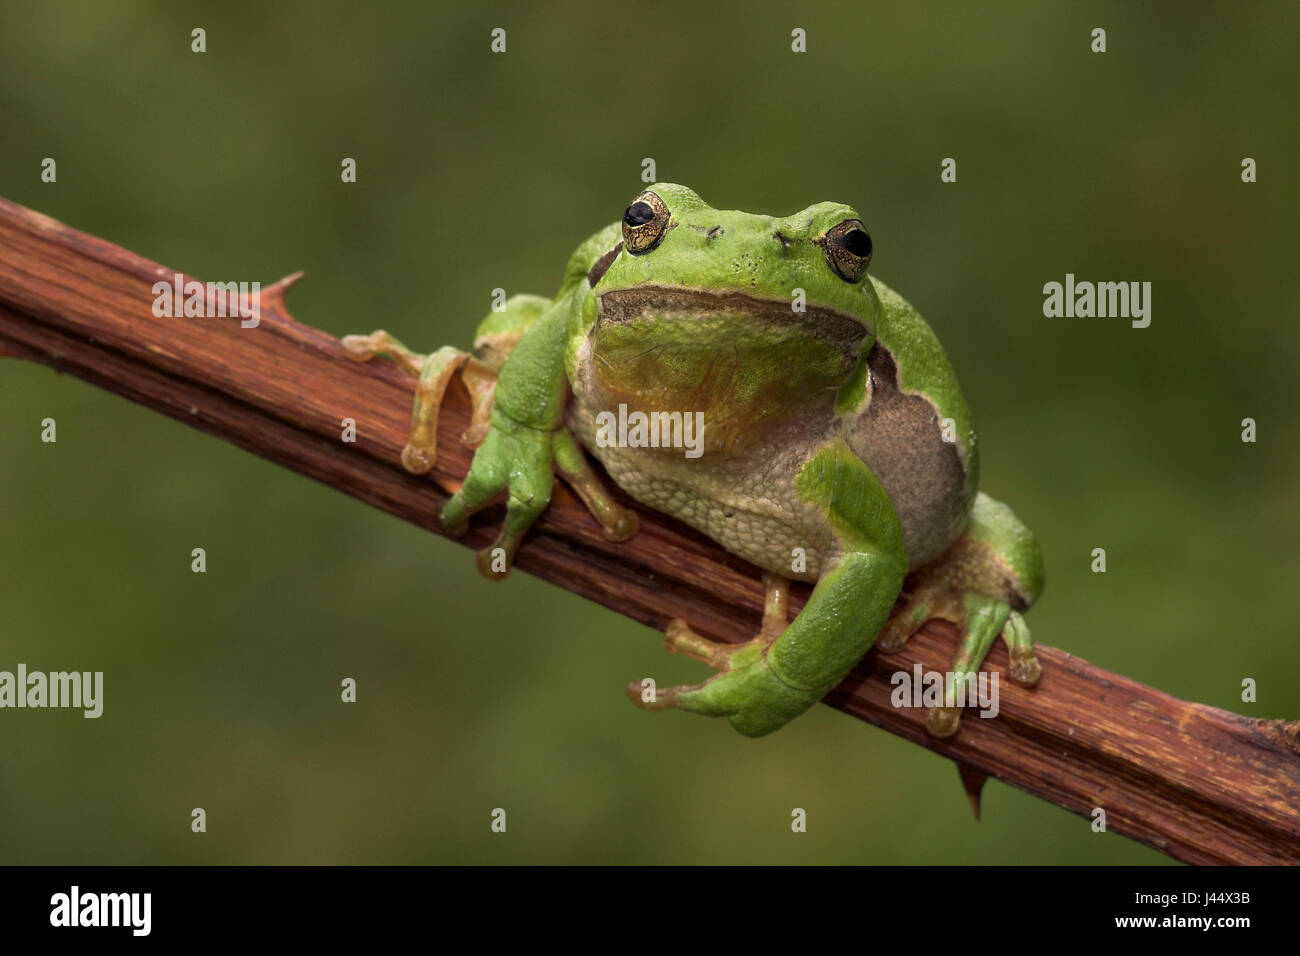 European tree frog posing on branch Stock Photo